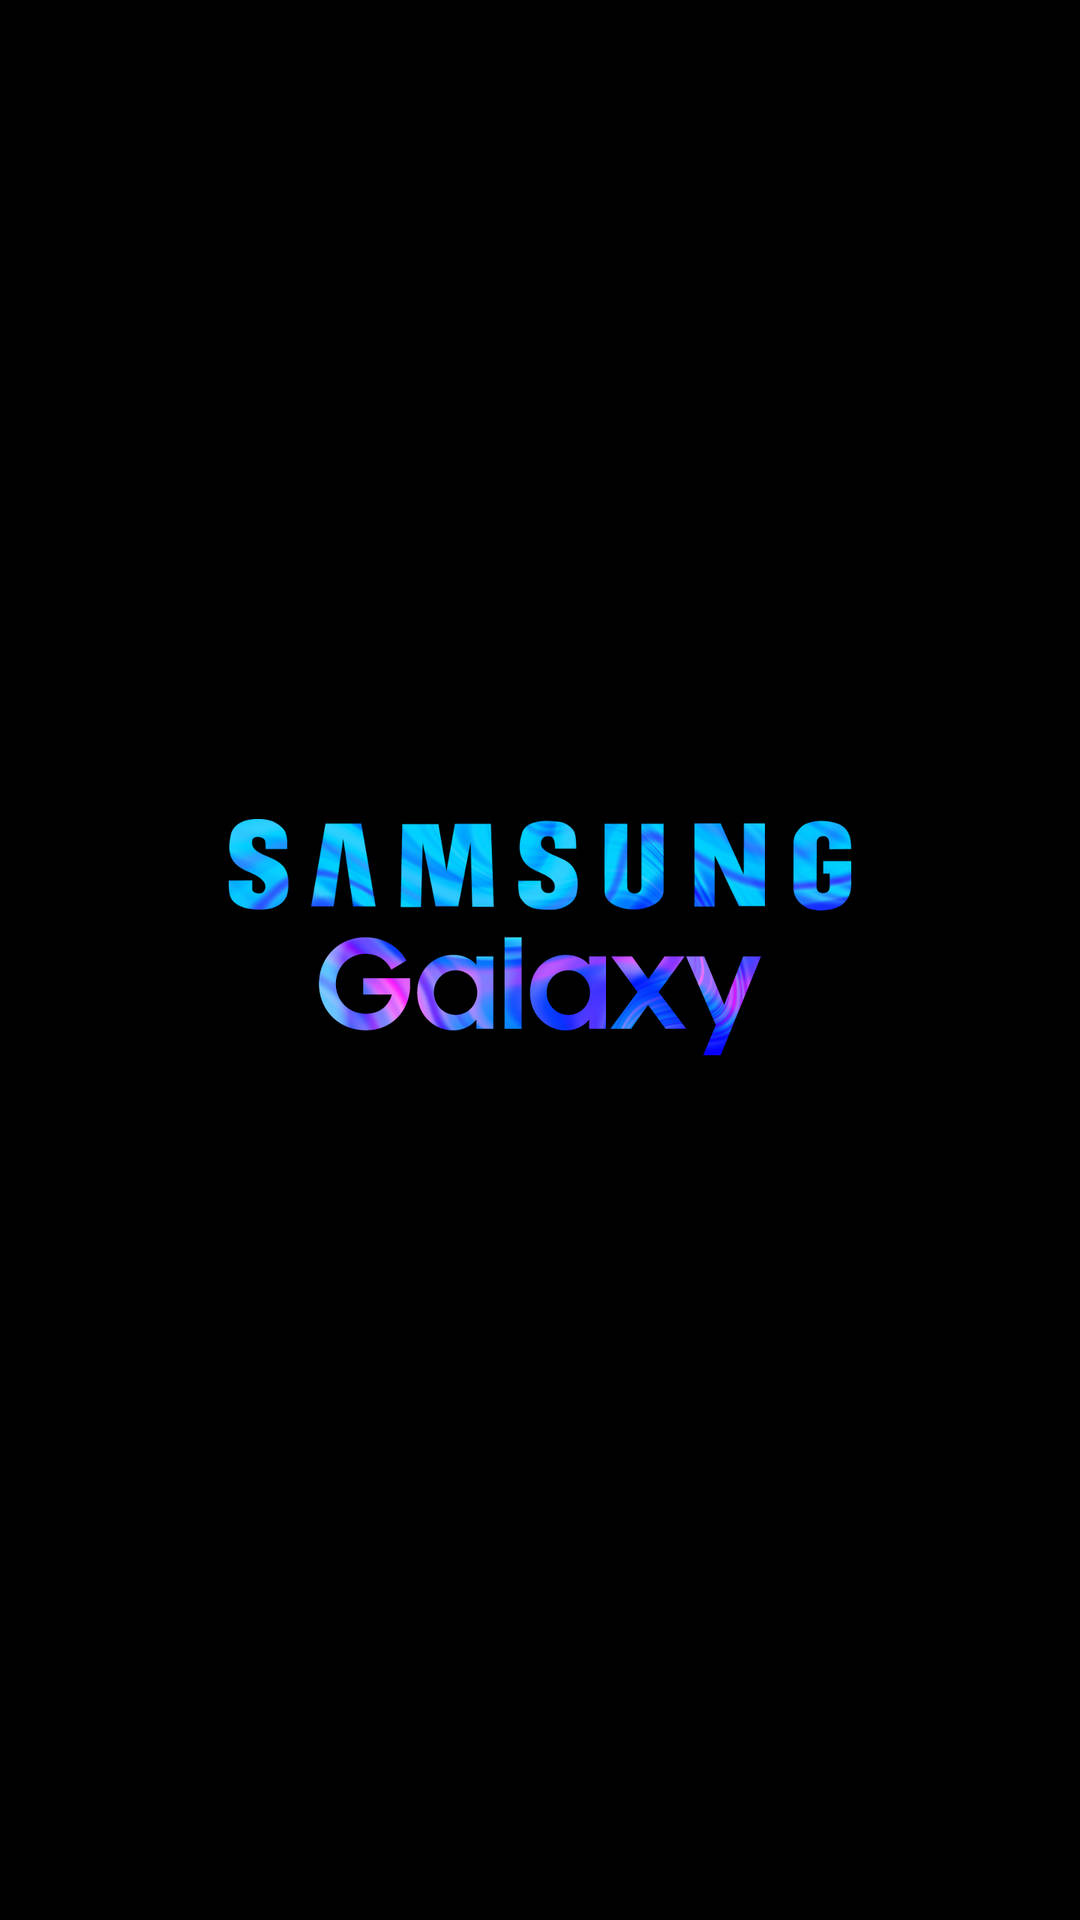 Samsung Mobile Galaxy Logo Background